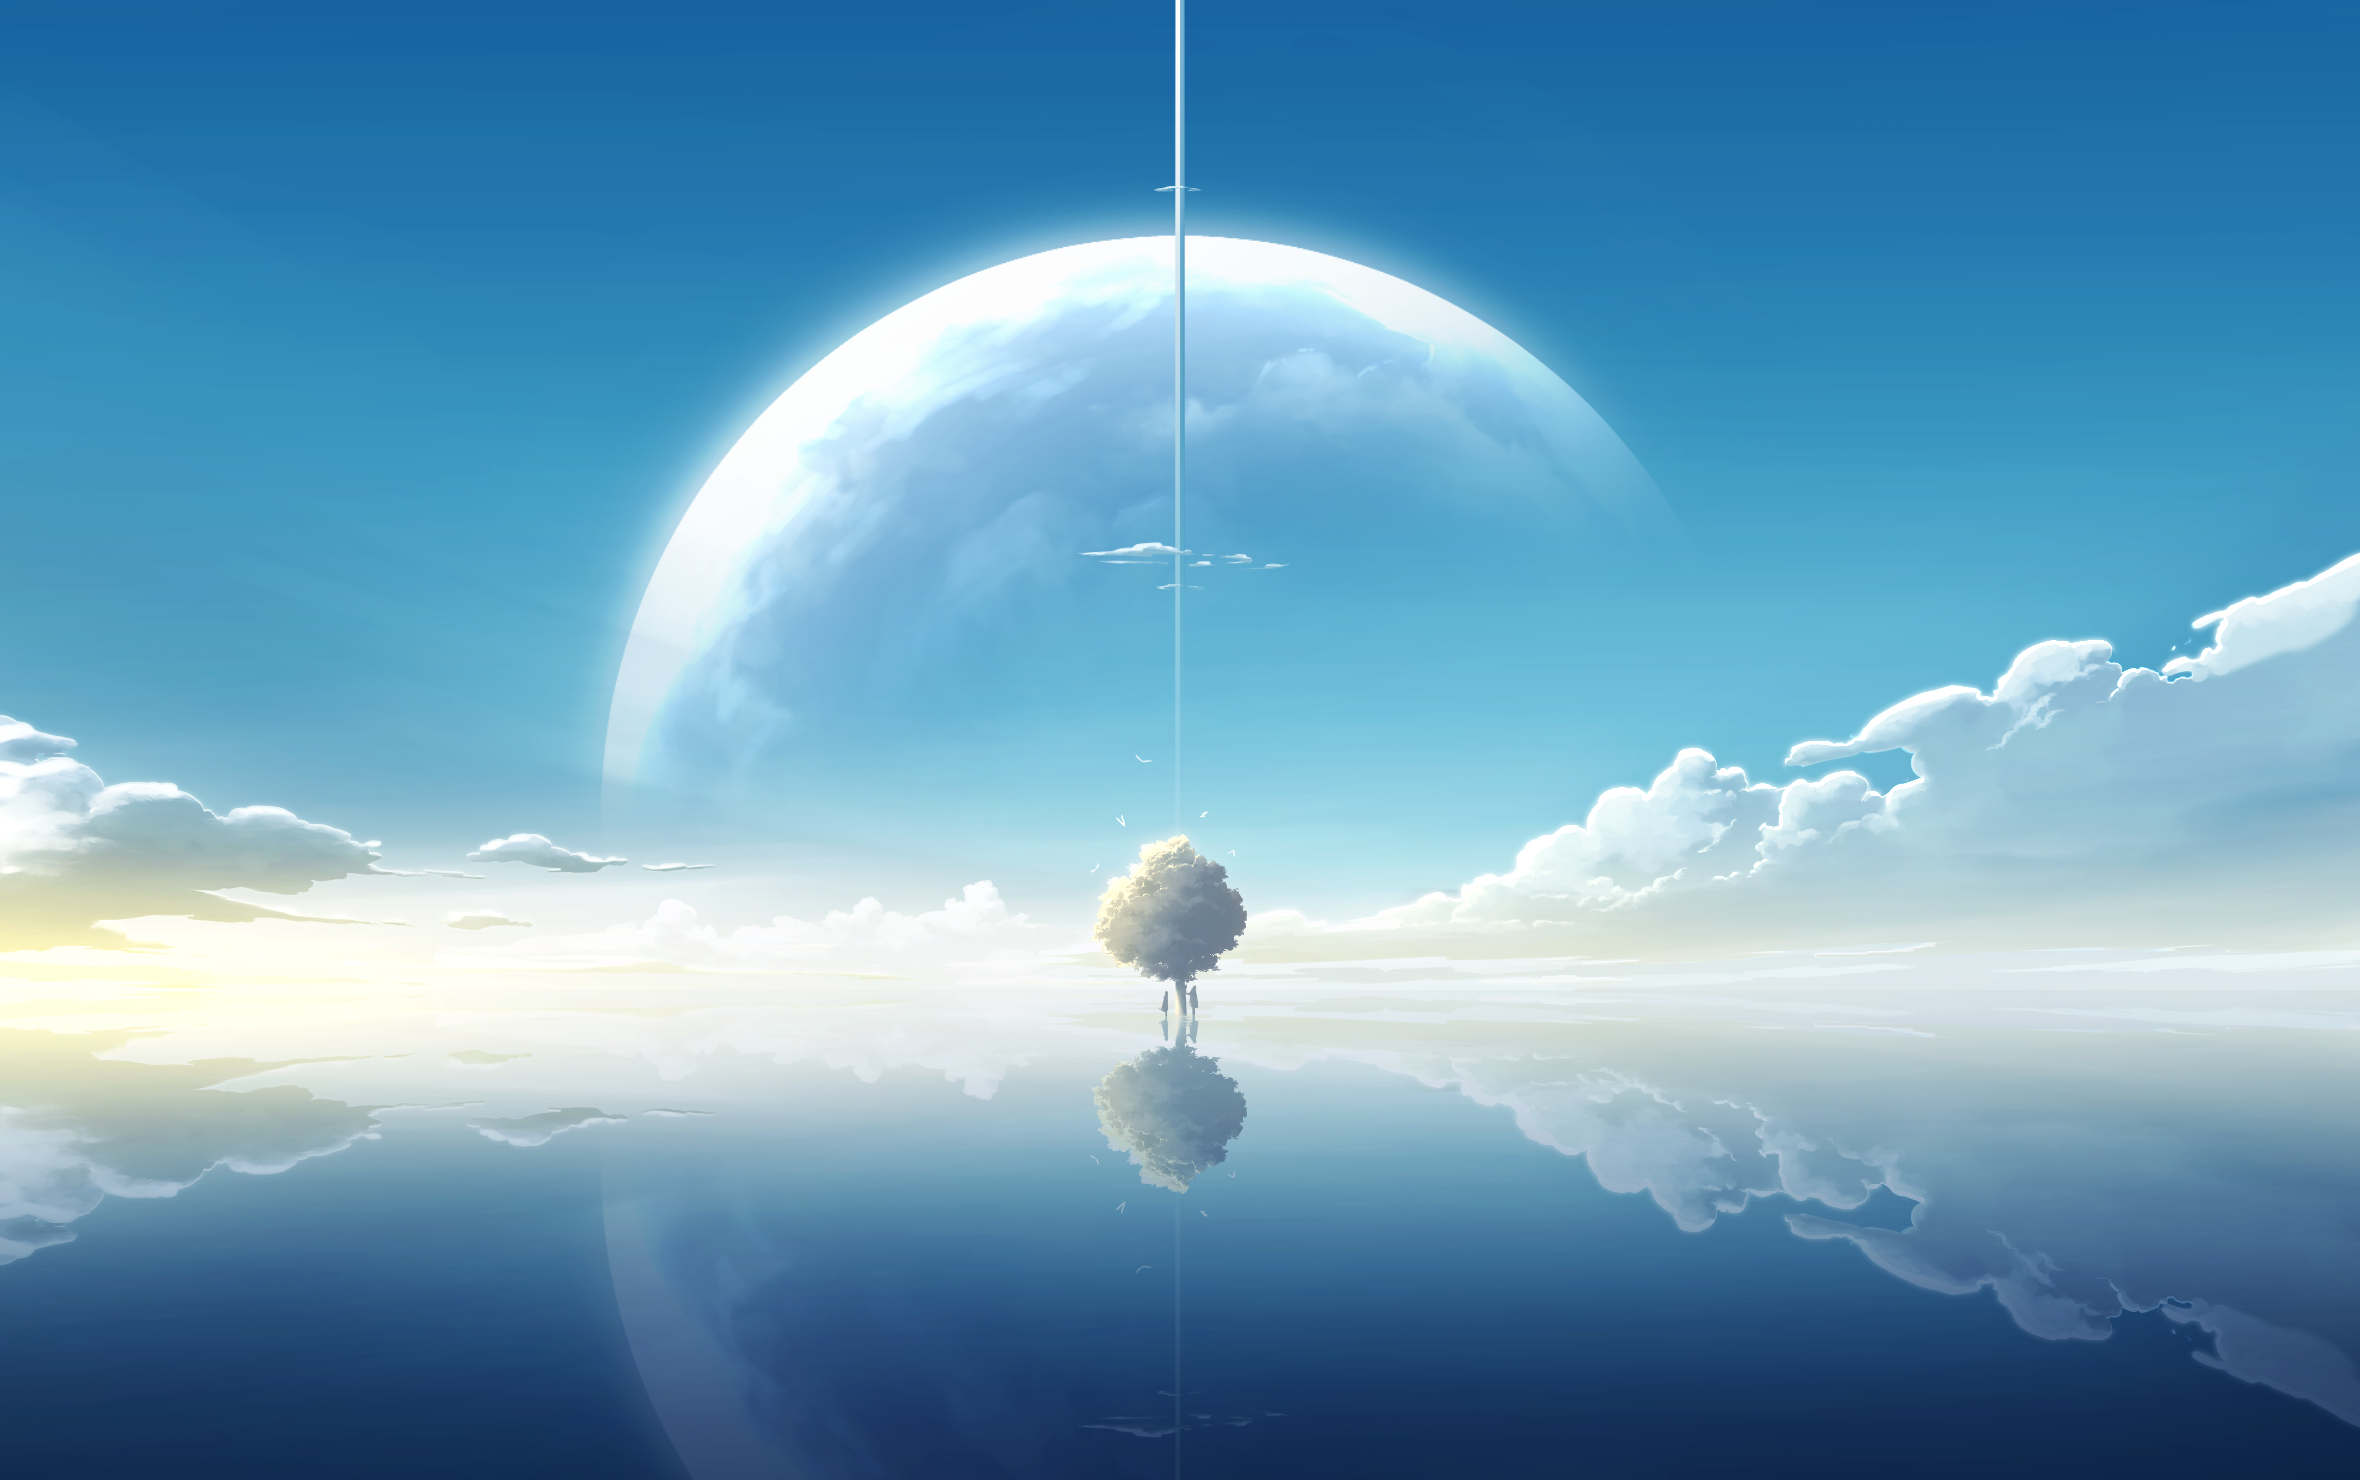 Nengoro Digital Art Artwork Illustration Clouds Reflection Planet Minimalism Simple Background Sky 2360x1480